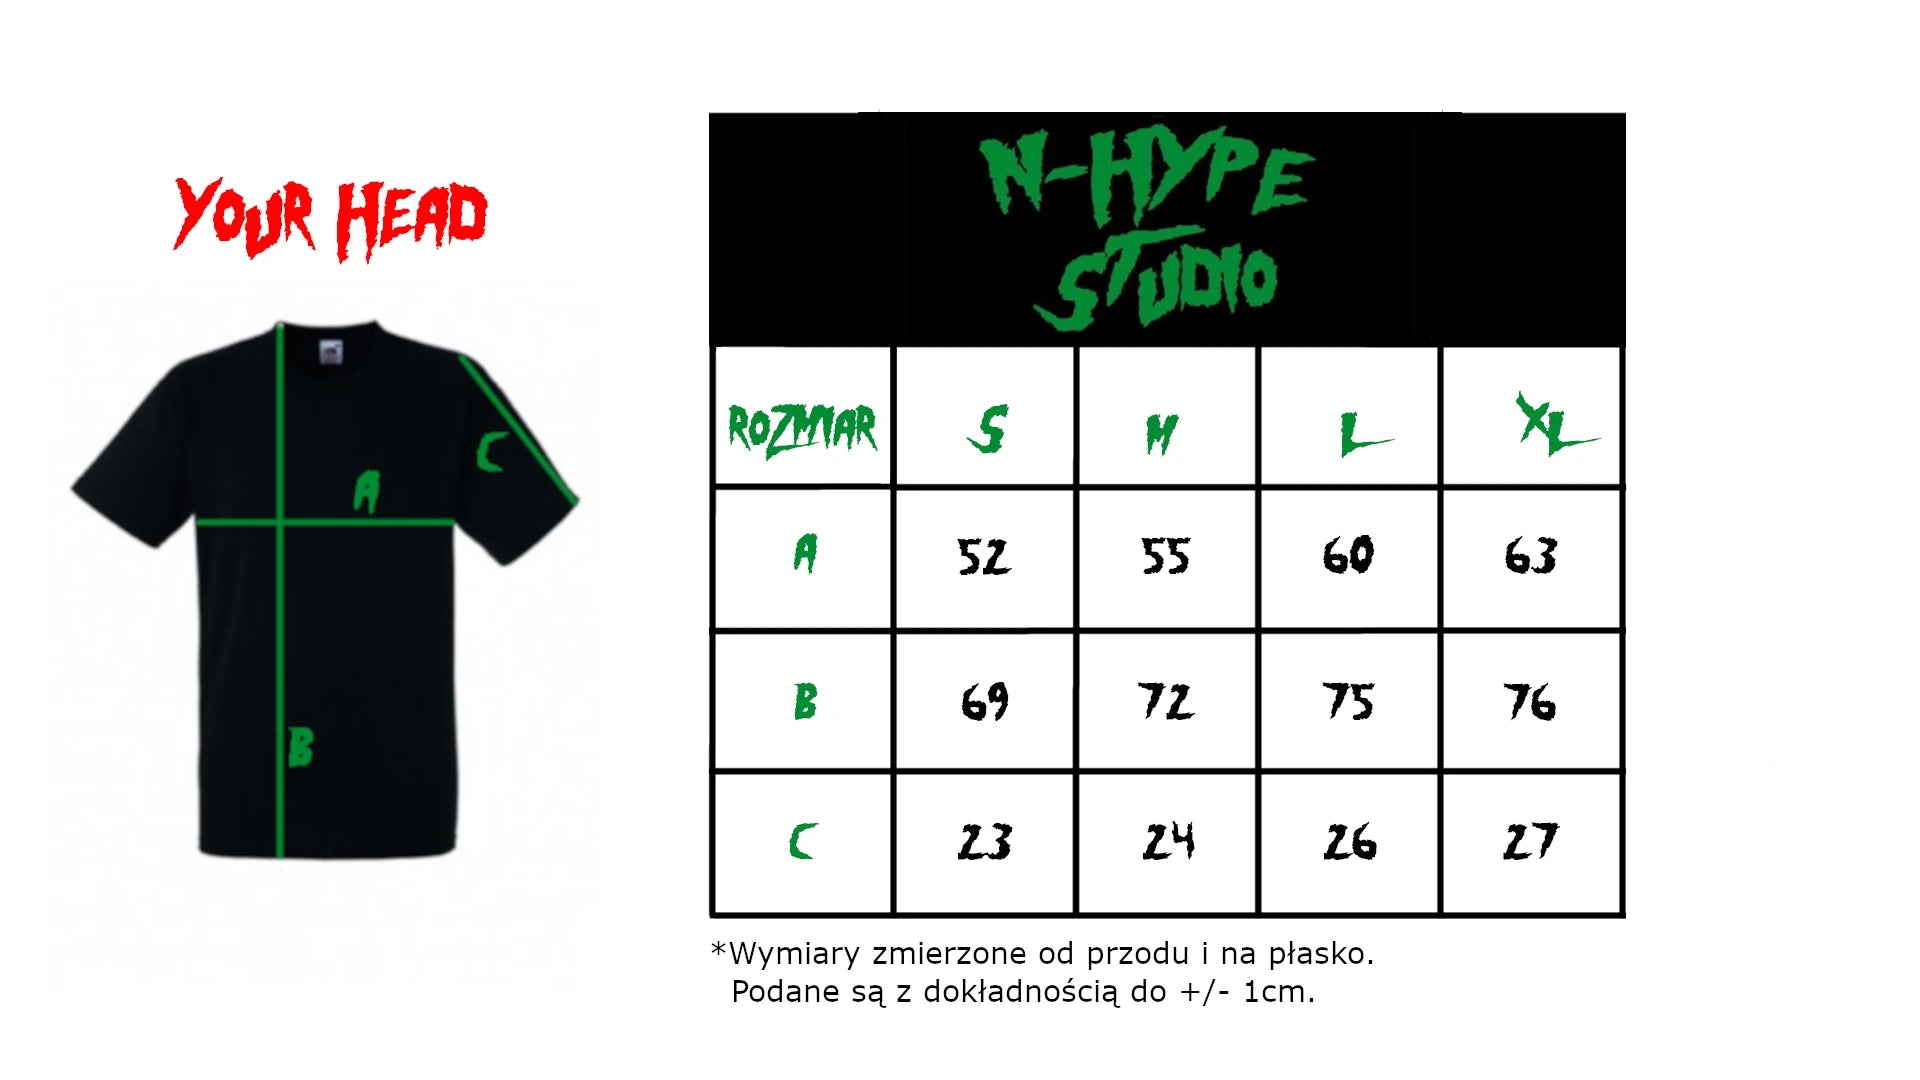 N-Hype Studio Warszawa City Pack T-shirt Black